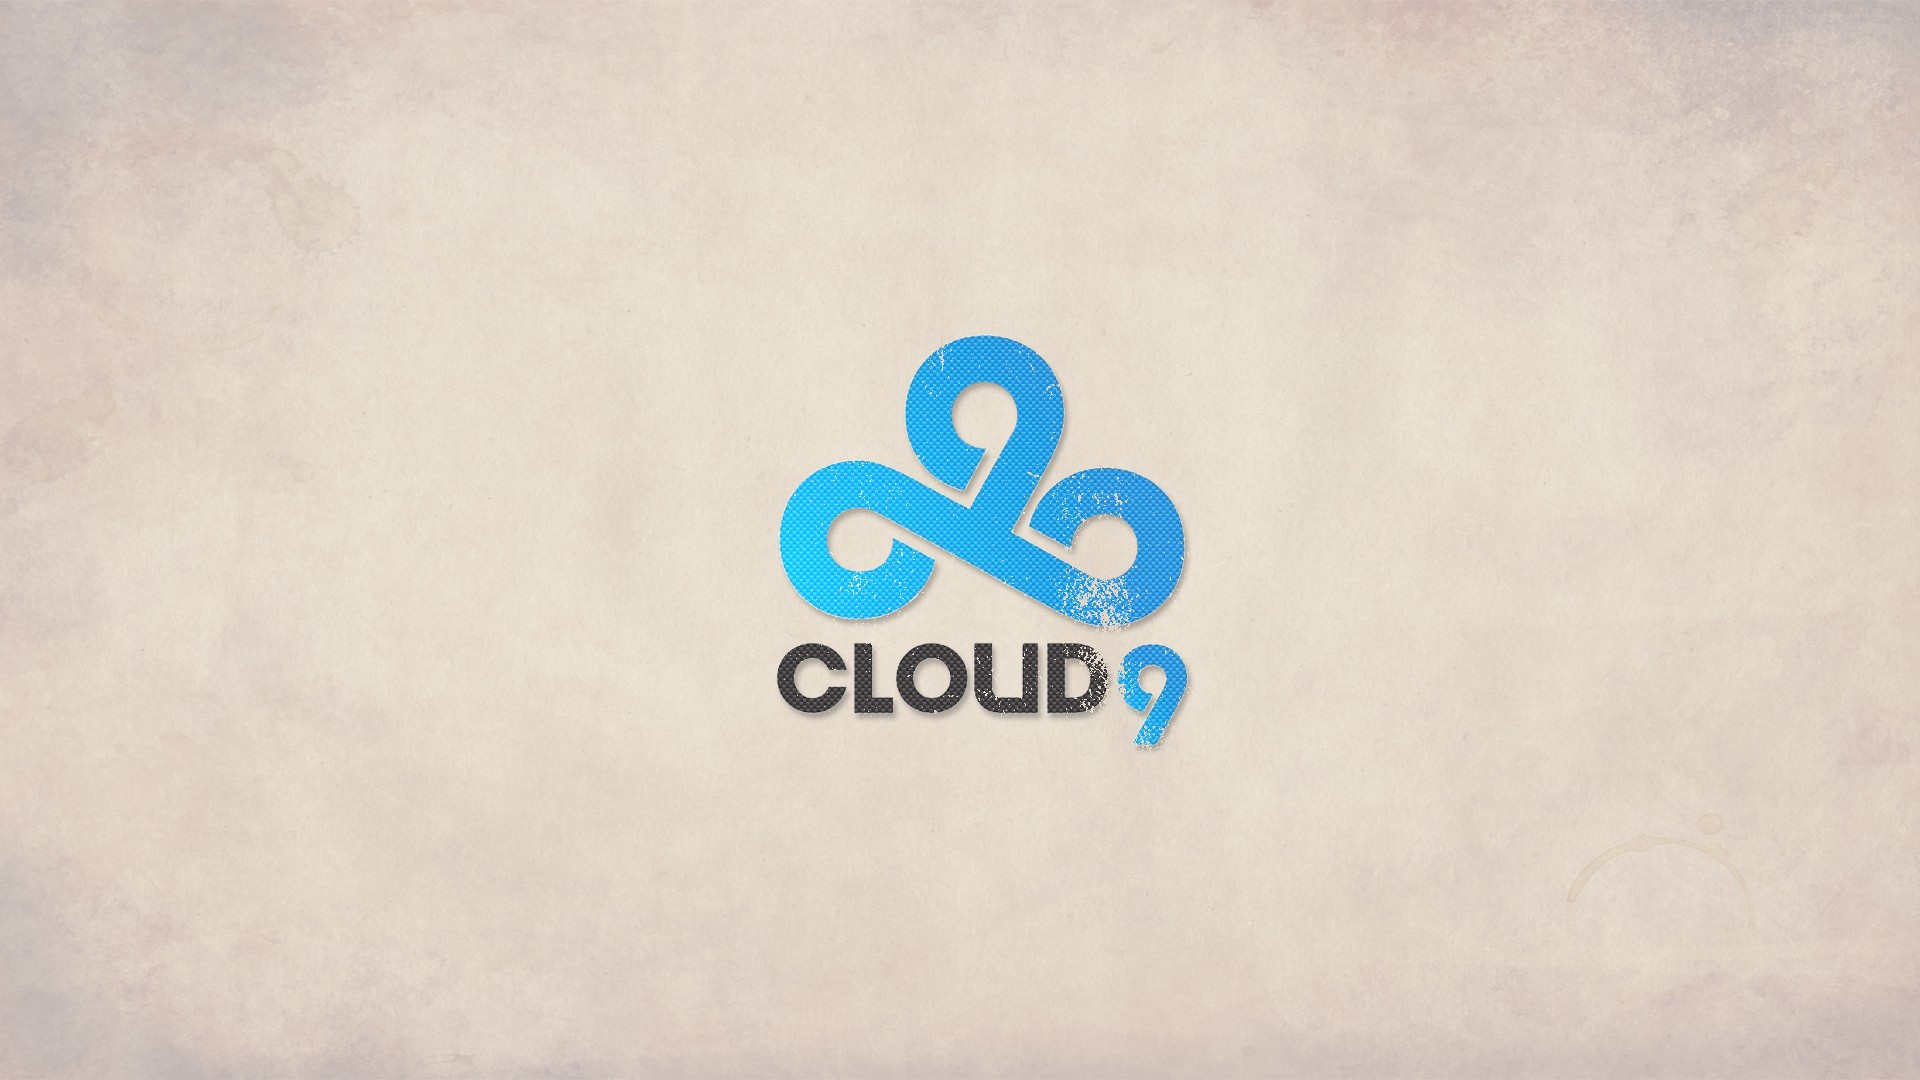 Cloud 9 Hd Backgrounds